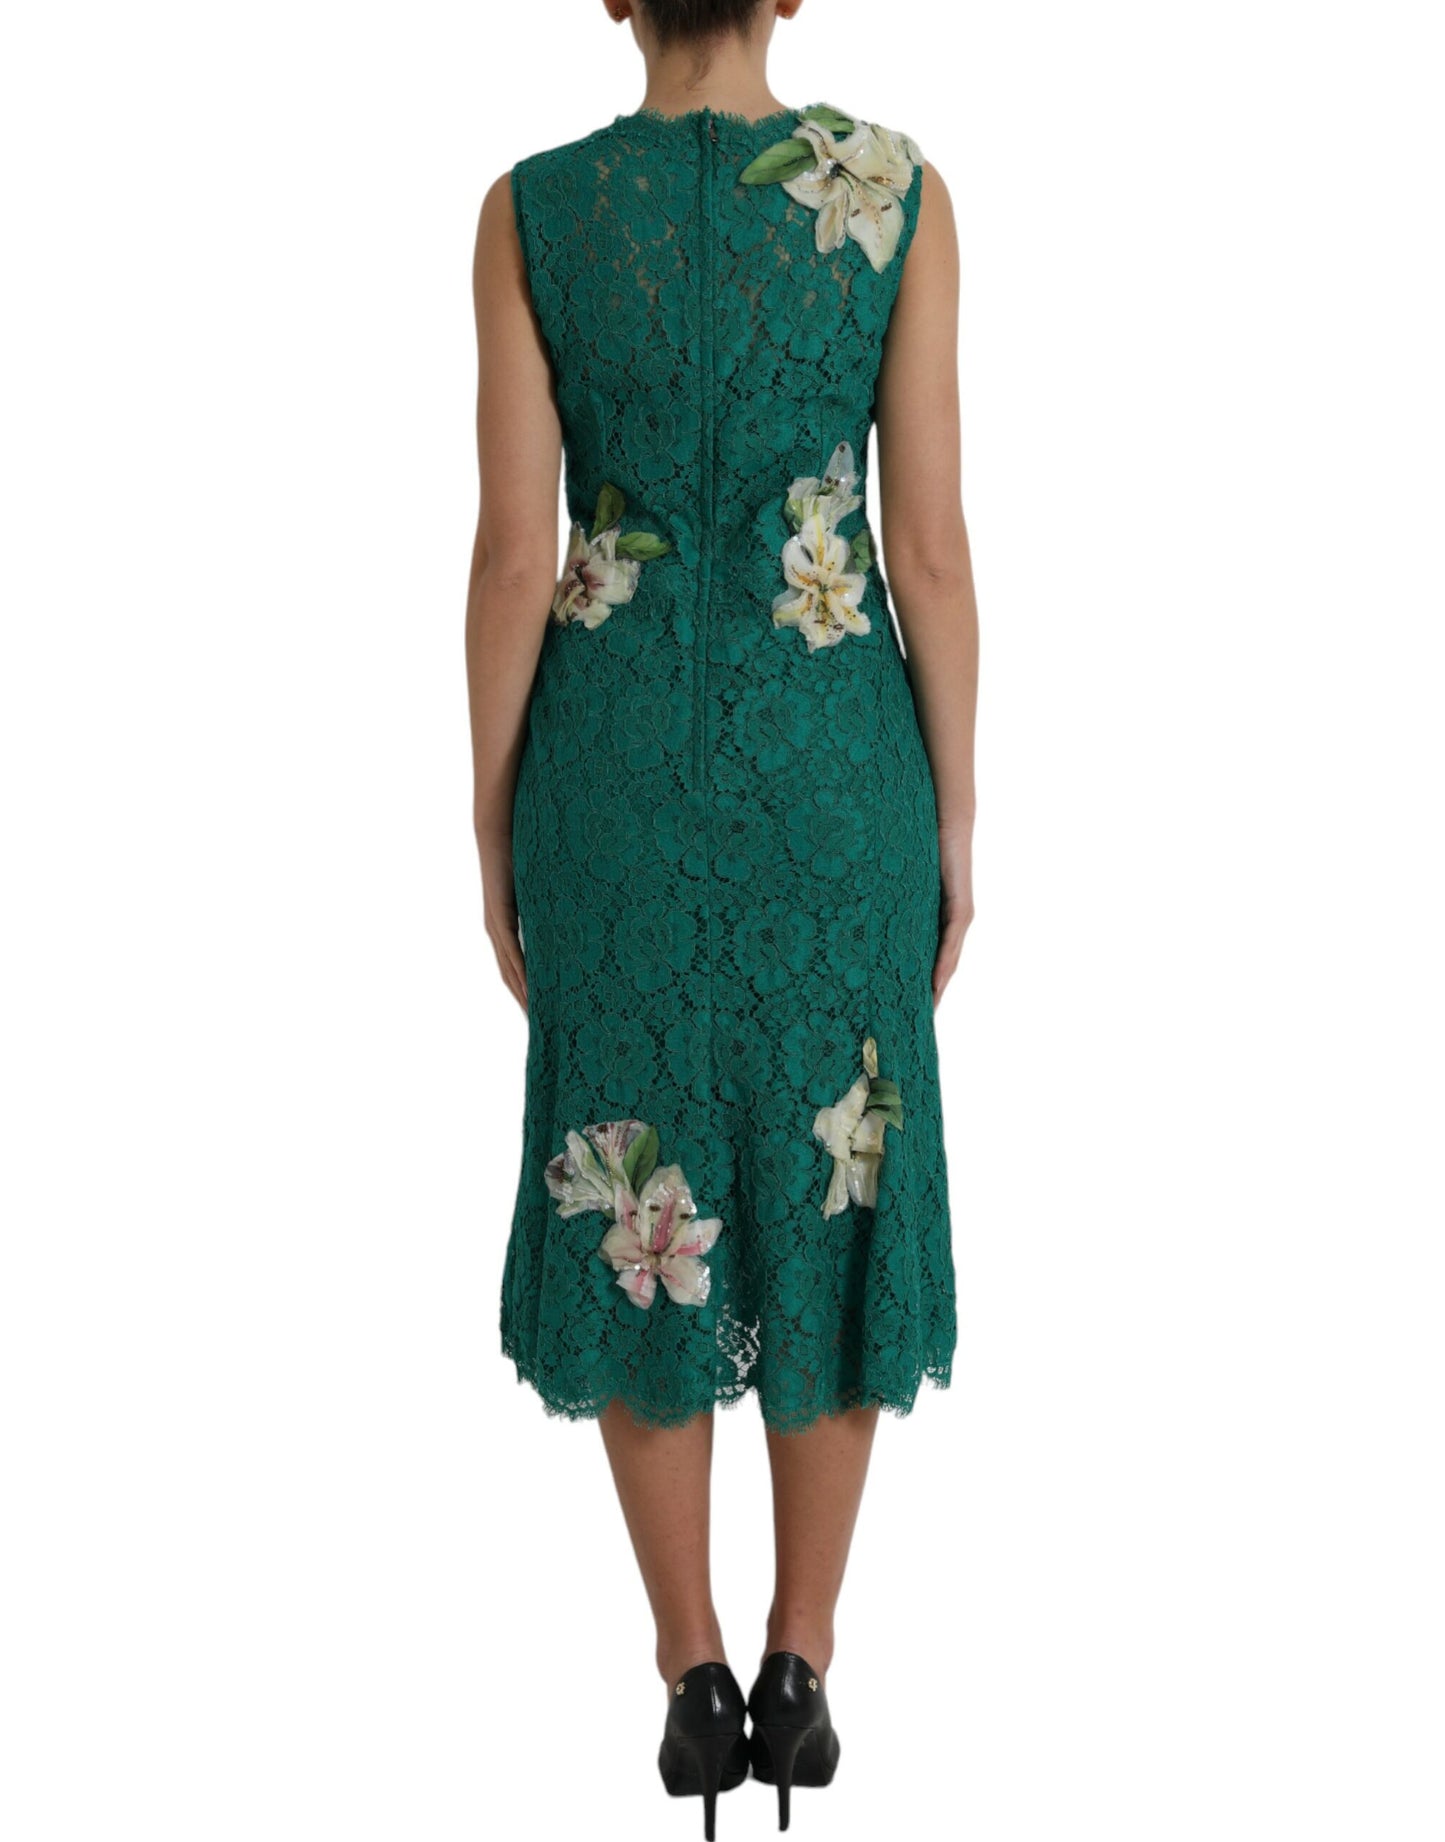 Elegant Lace Midi Dress with Floral Appliques